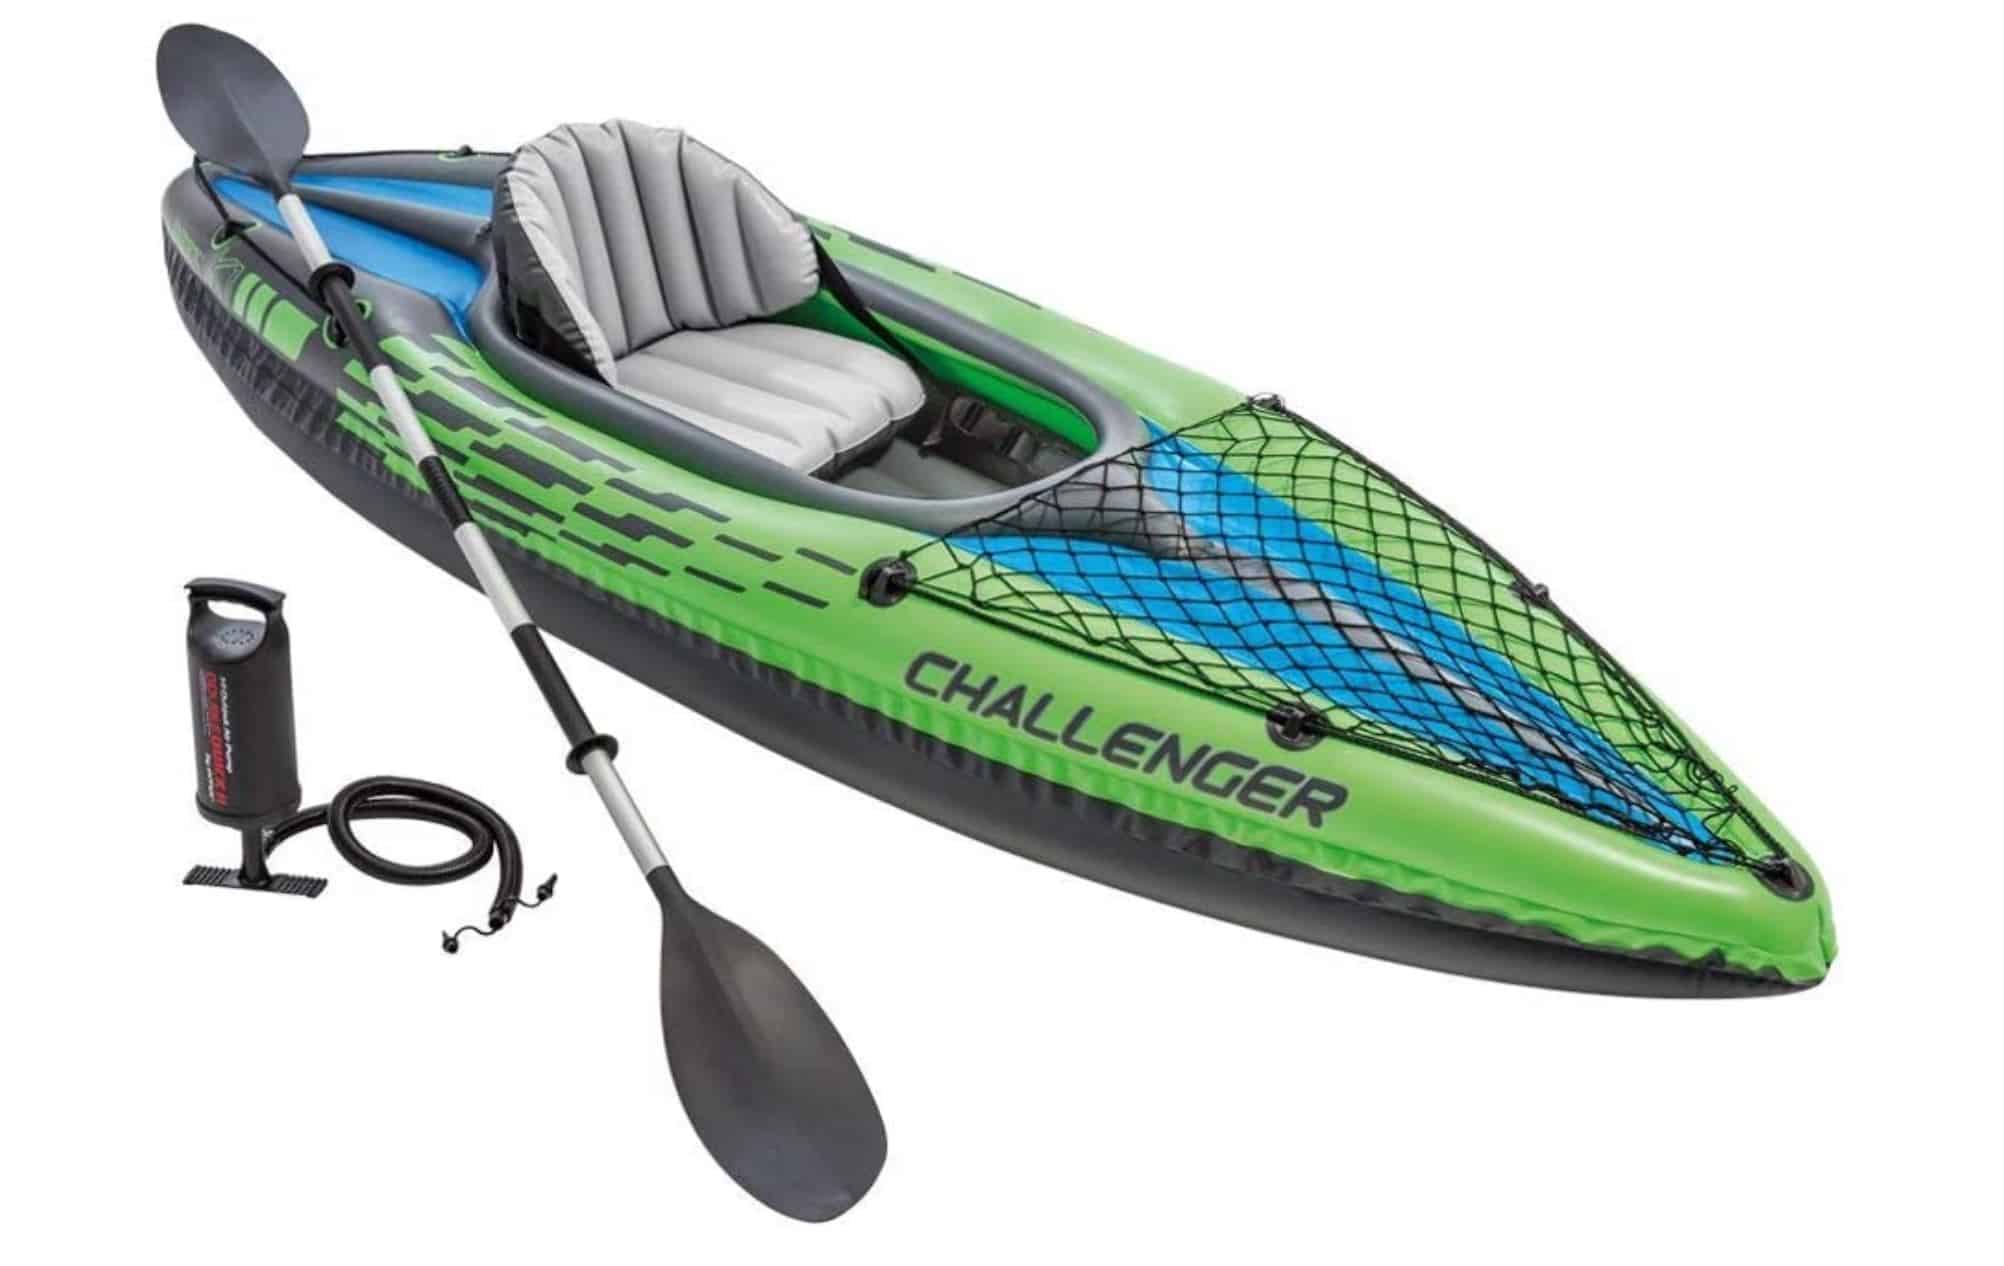 Intex Challenger Kayak Series - Amazon